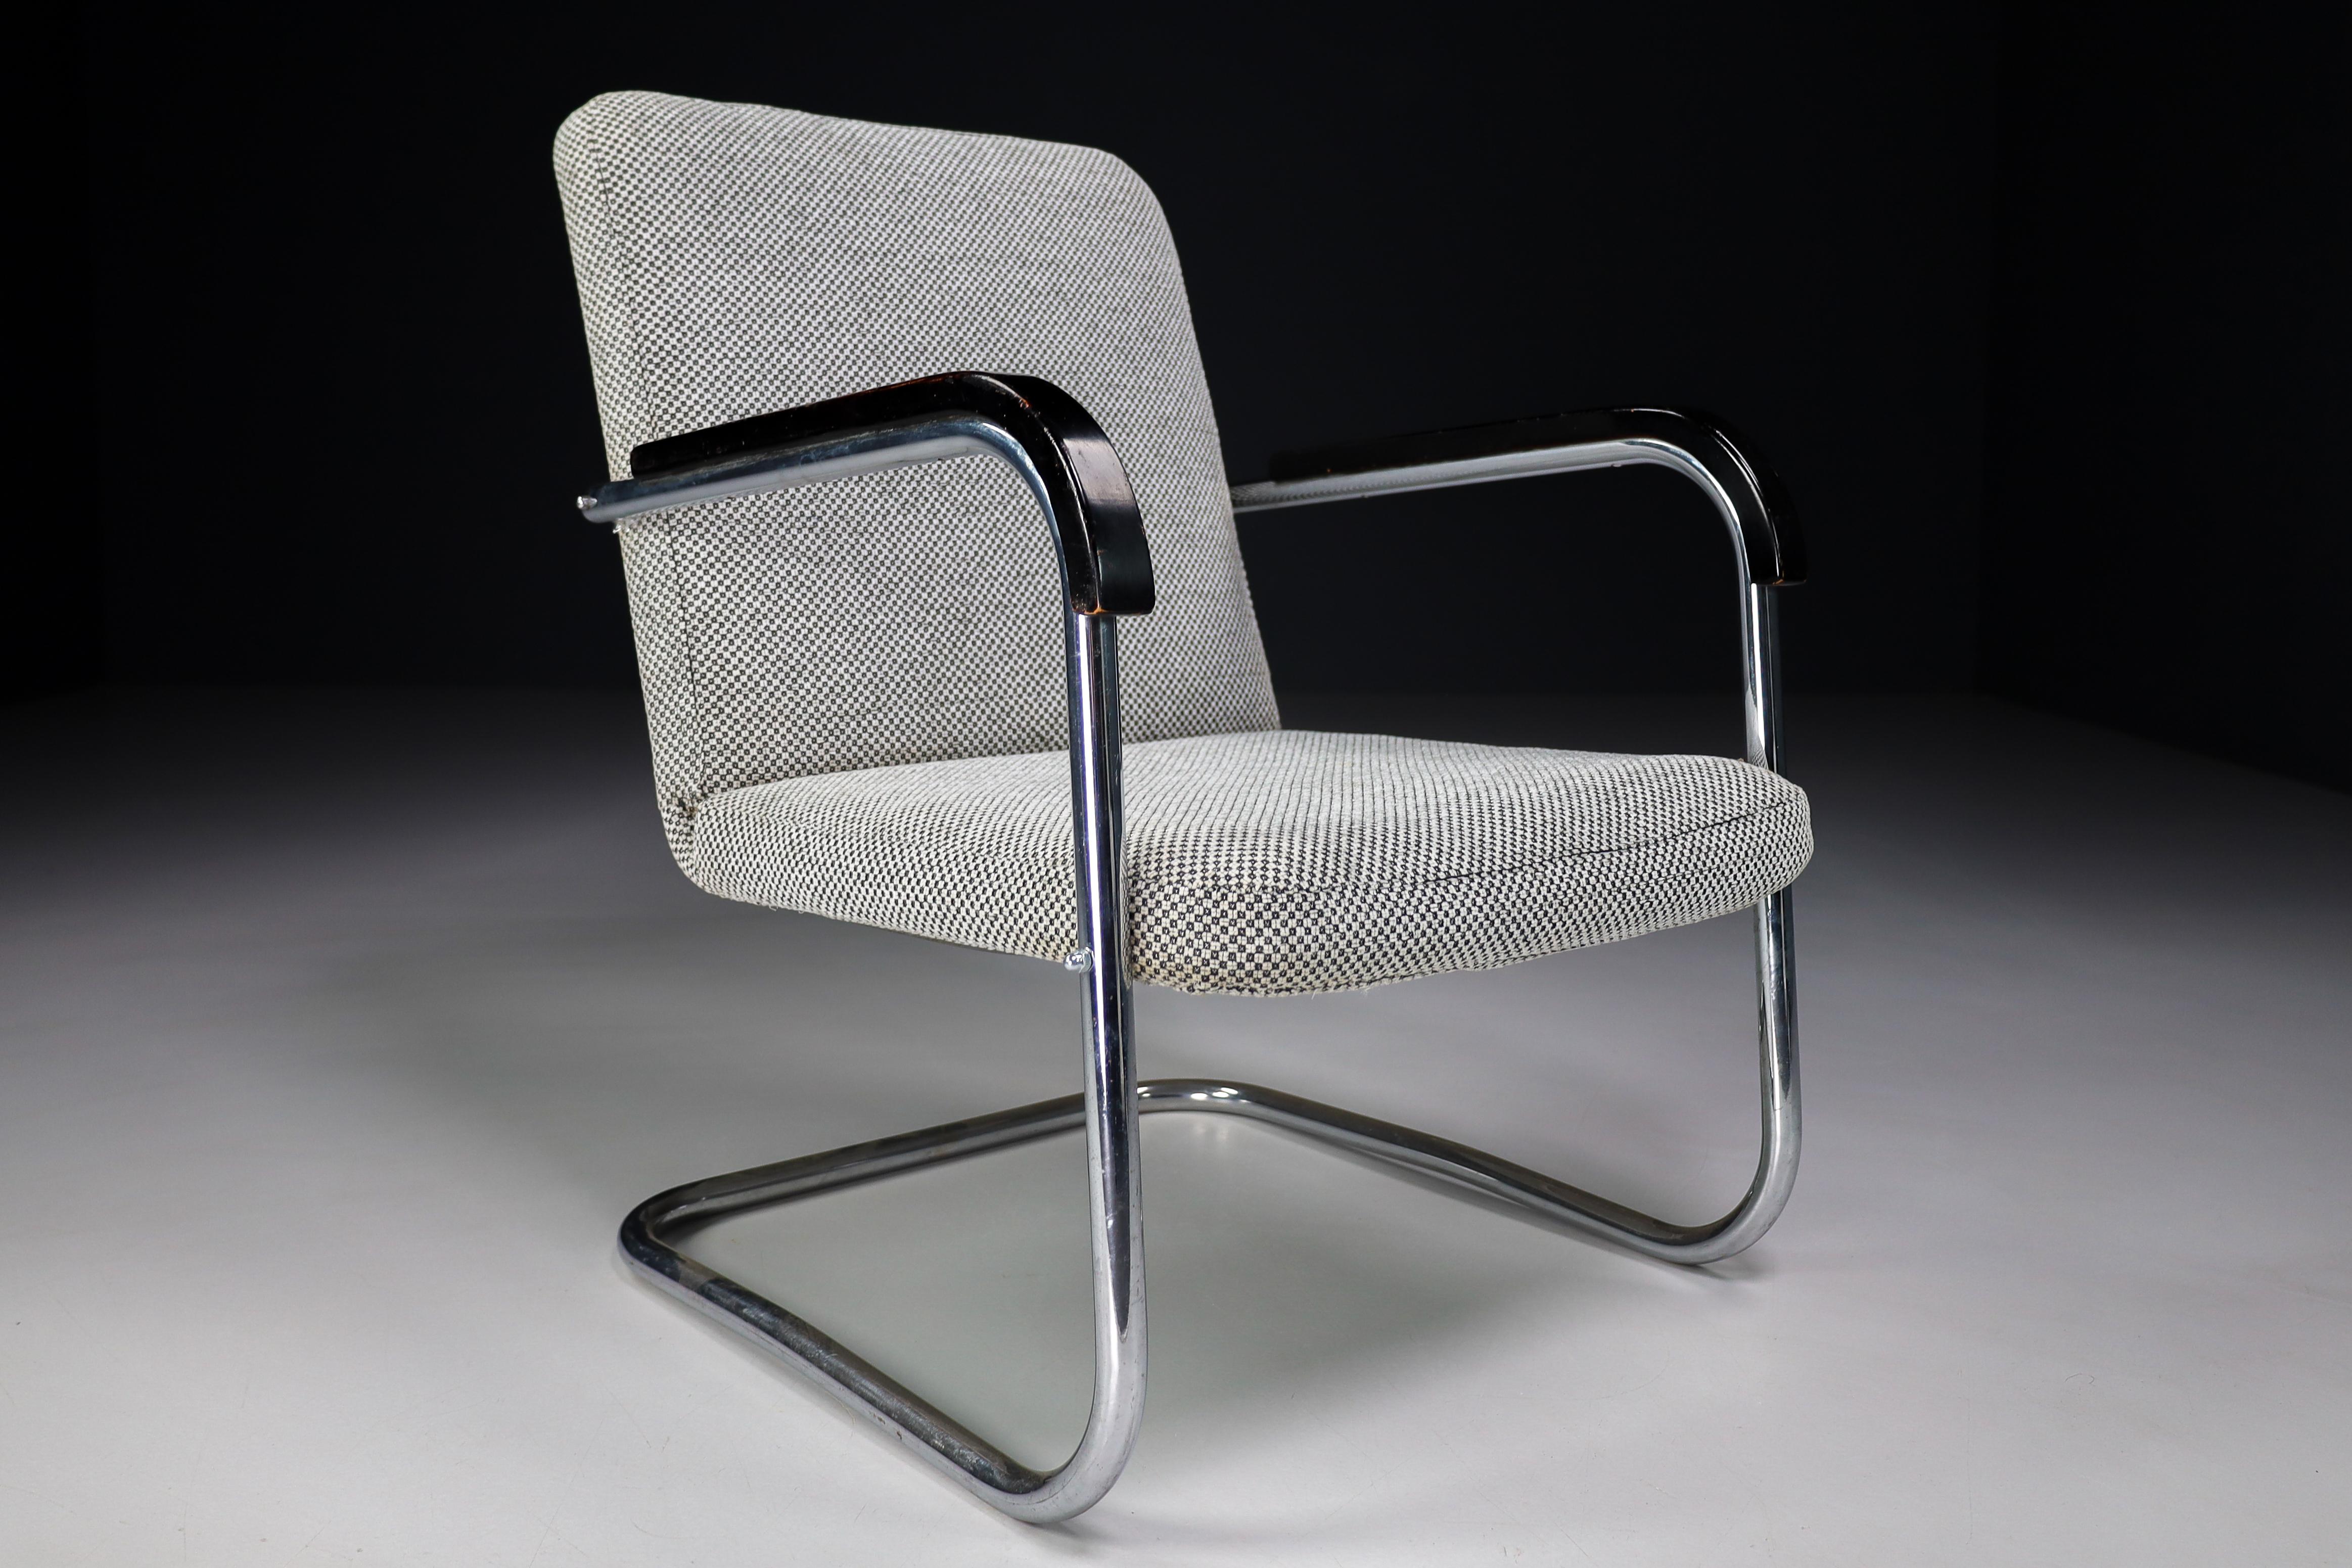 Pair of Chrome Steel Armchairs by Thonet circa 1930s Midcentury Bauhaus Period 3